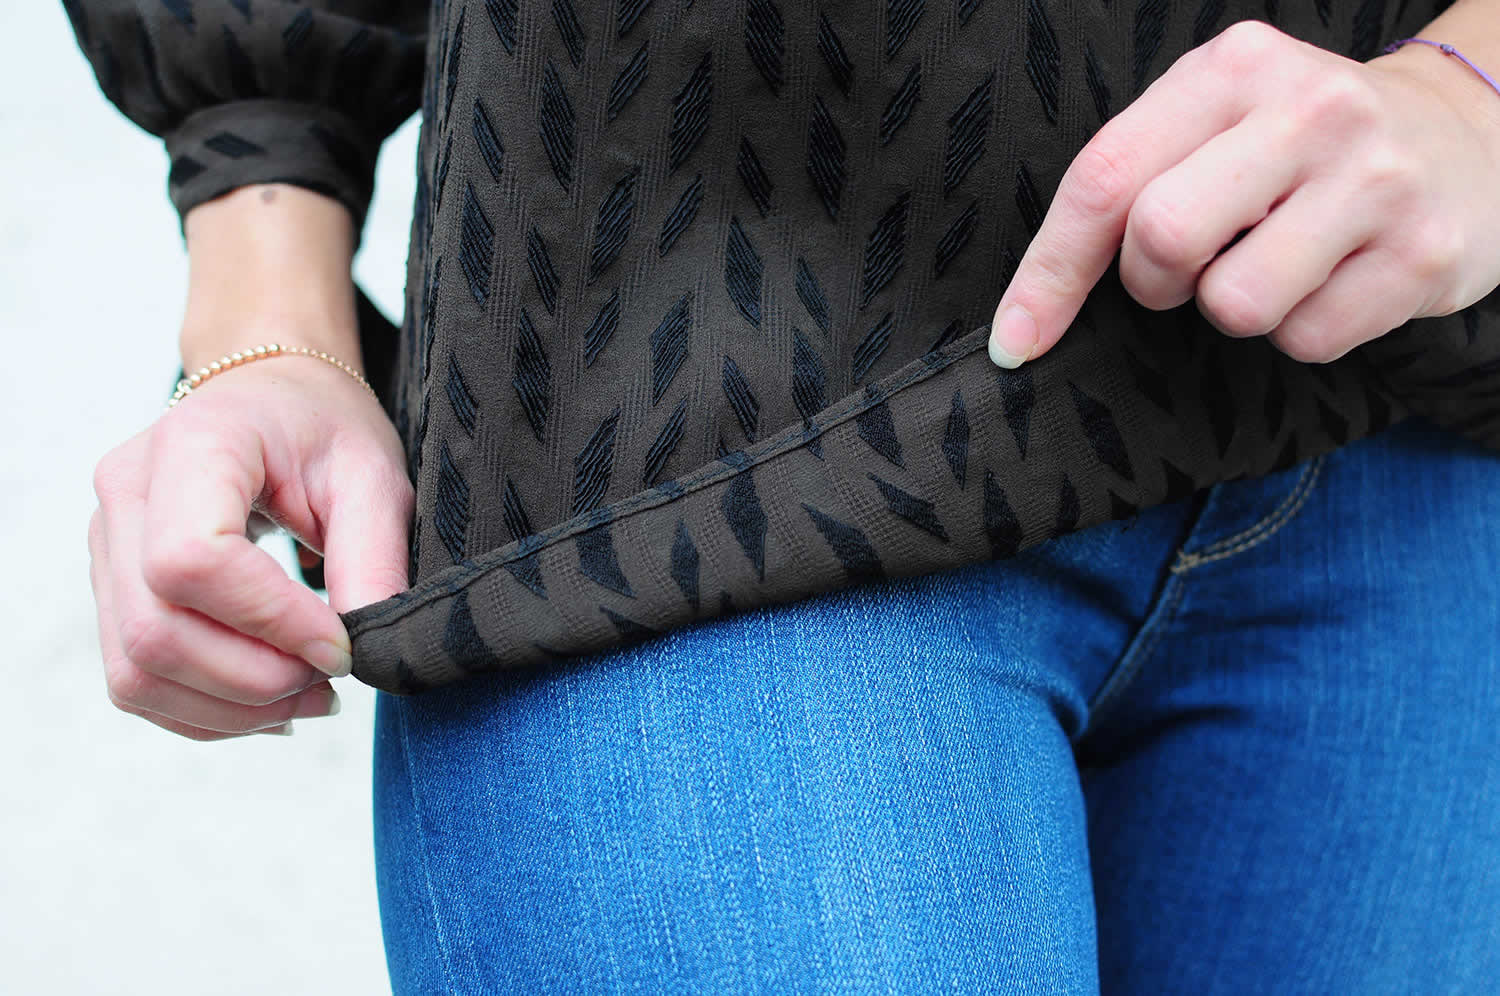 Ladulsatina - Sewing blog - Blog di cucito - Jolanda blusa by Atelier Vicolo n 6 in silk viscose blend - Pin hem detail